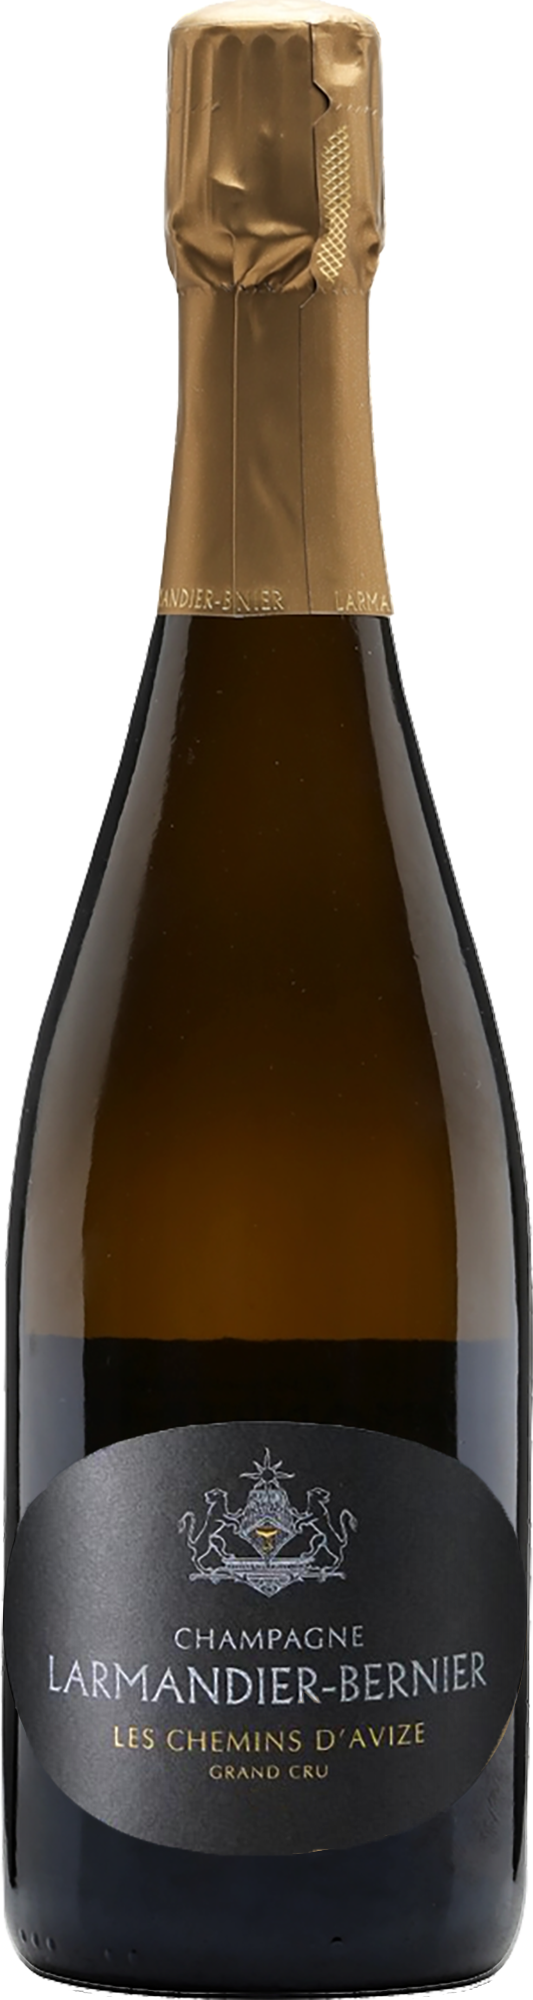 Champagne Larmandier-Bernier Grand Cru Les Chemins d'Avize 2015 (Disg. Sep 2022)